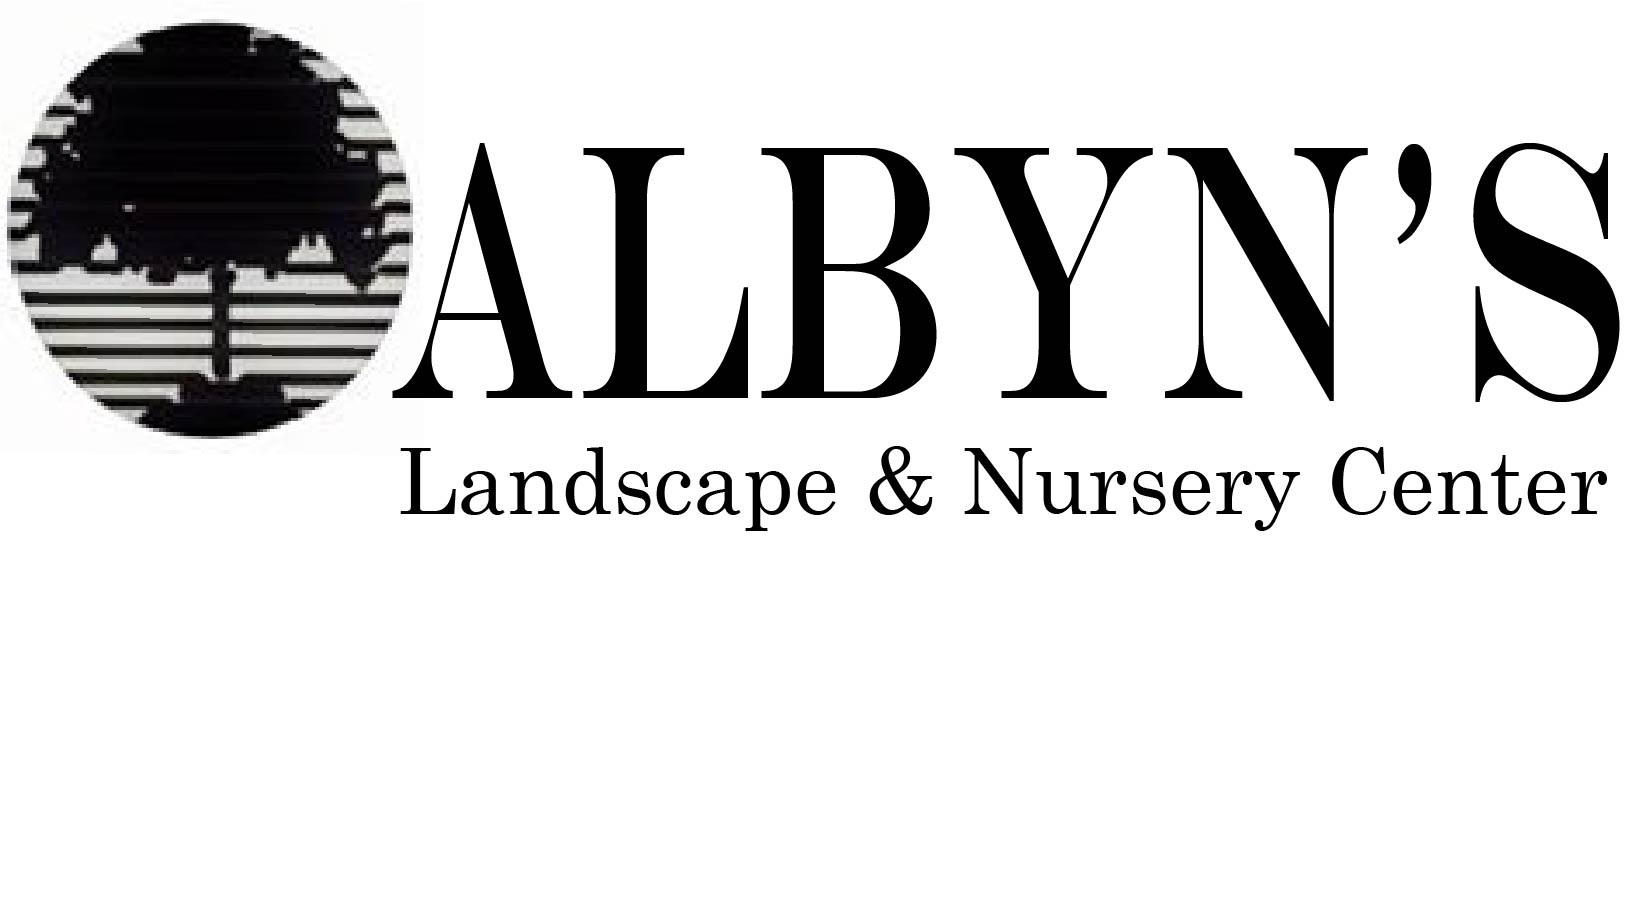 ALBYN&#39;S LANDSCAPE &amp; NURSERY CENTER